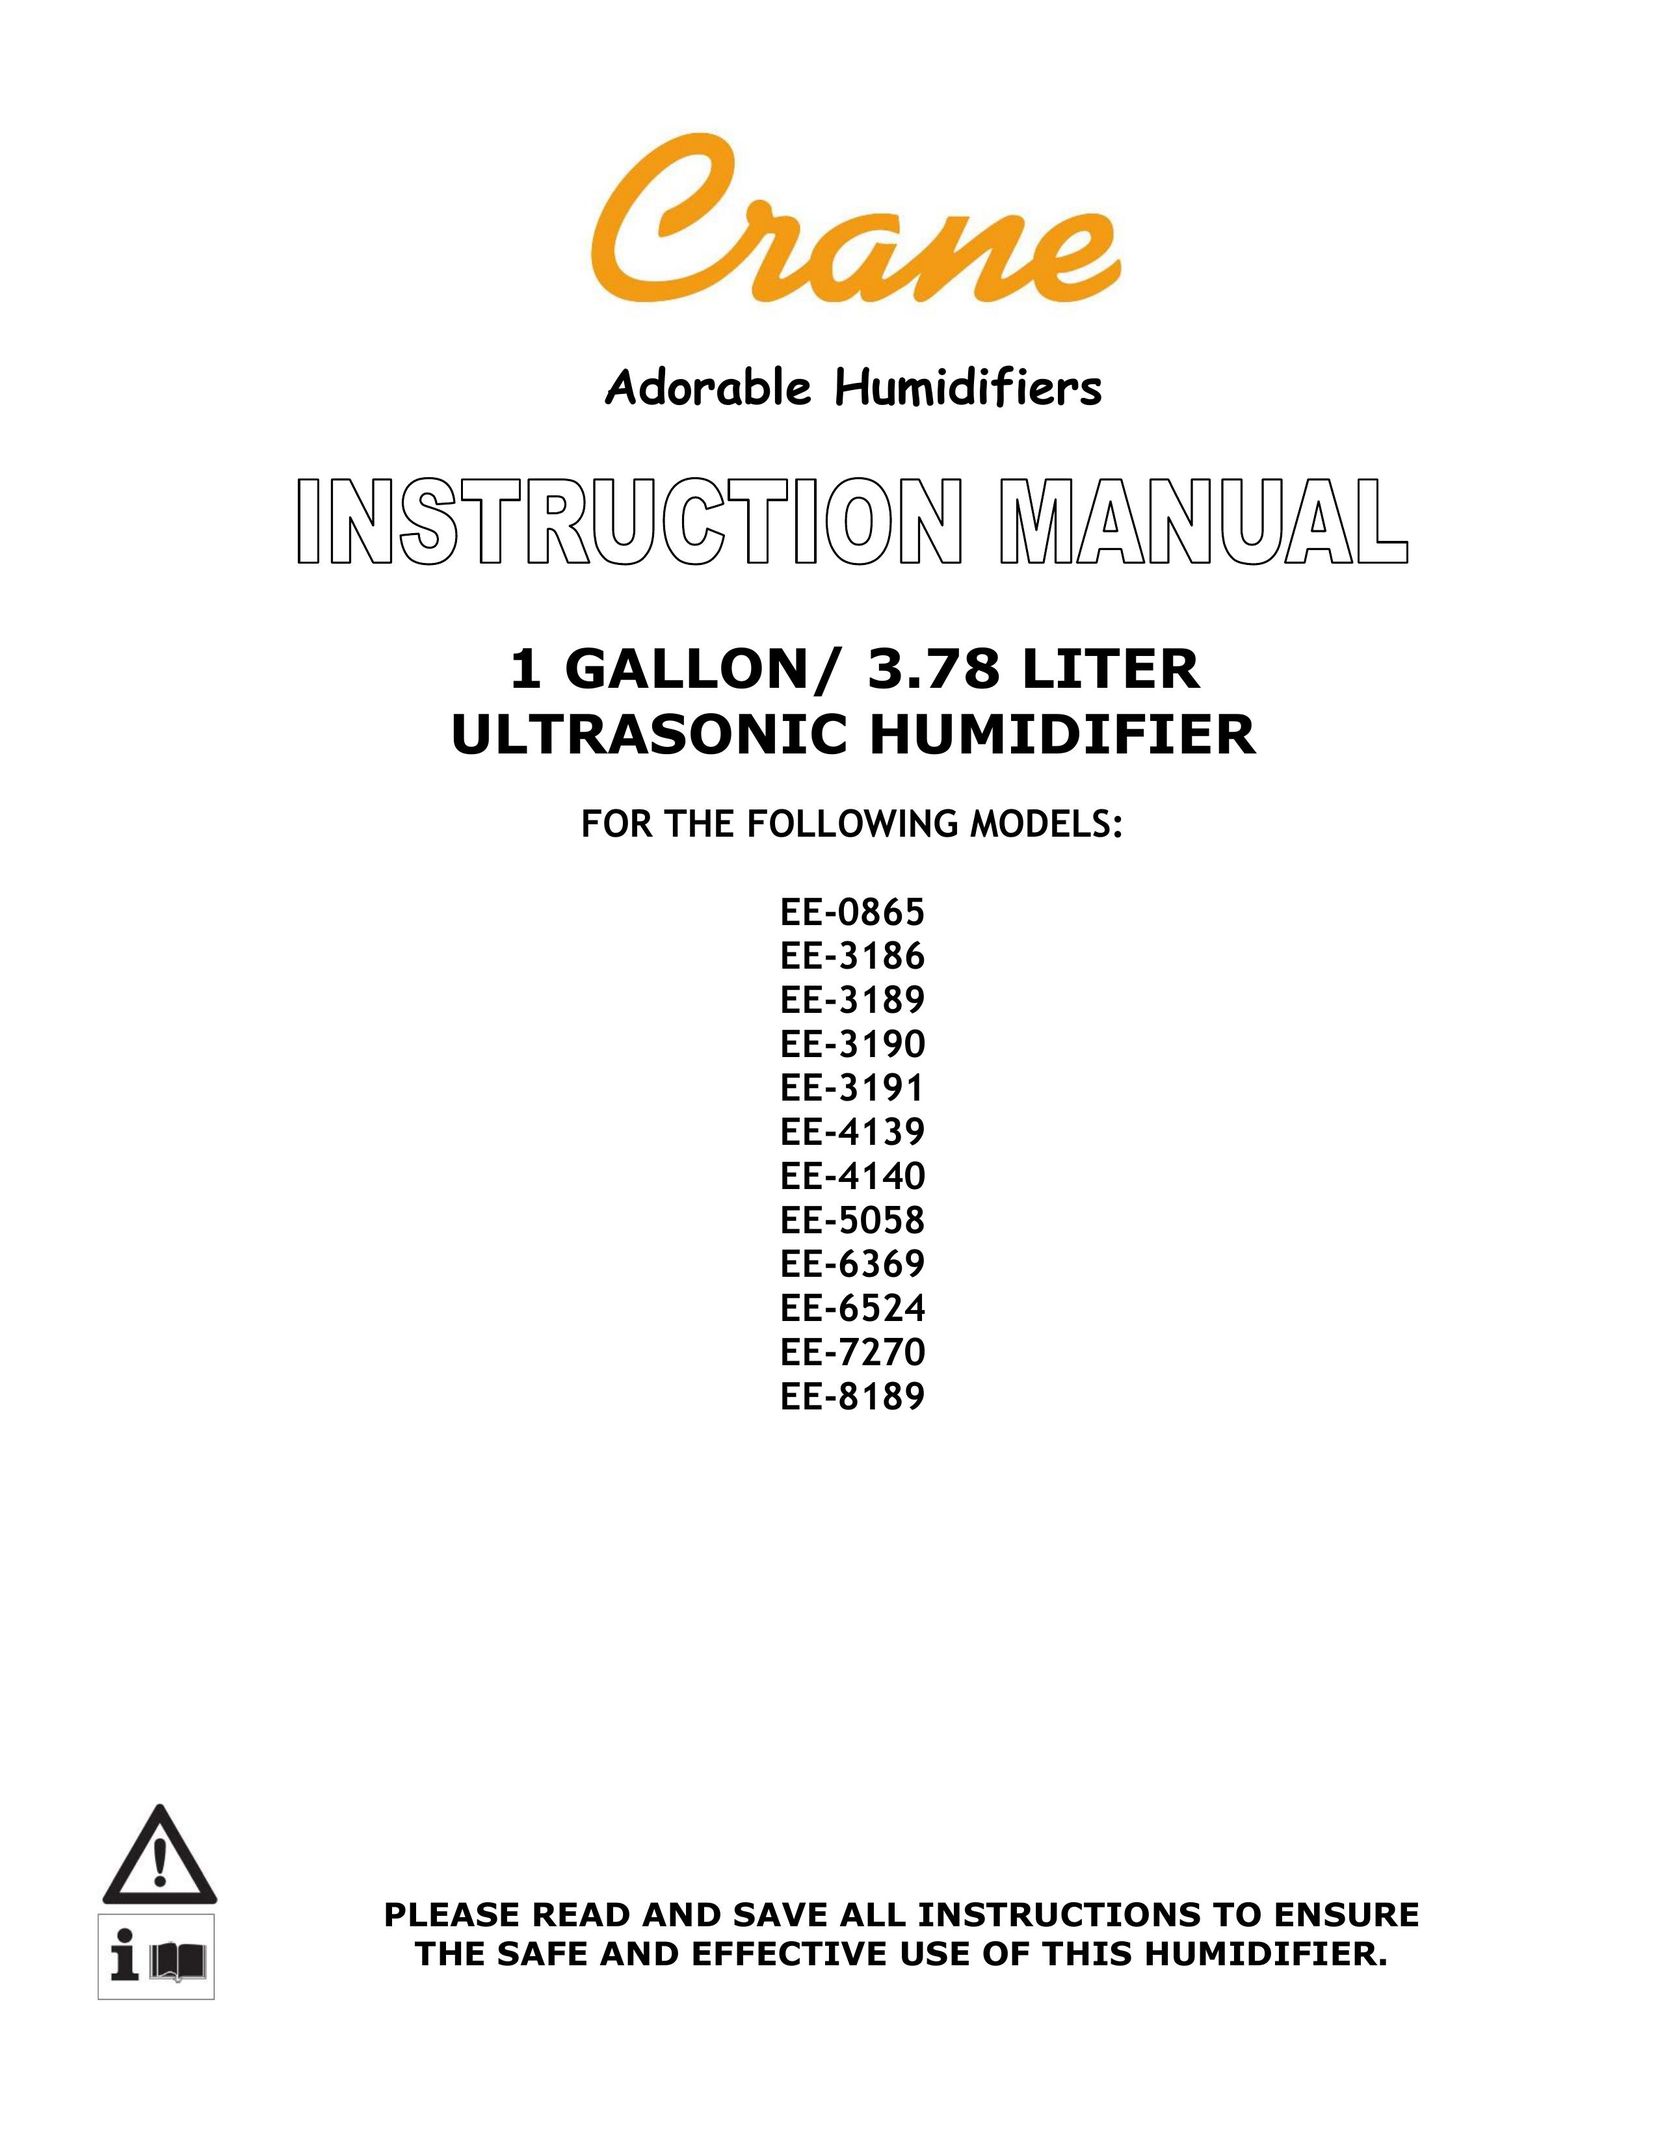 Crane EE-5058 Humidifier User Manual